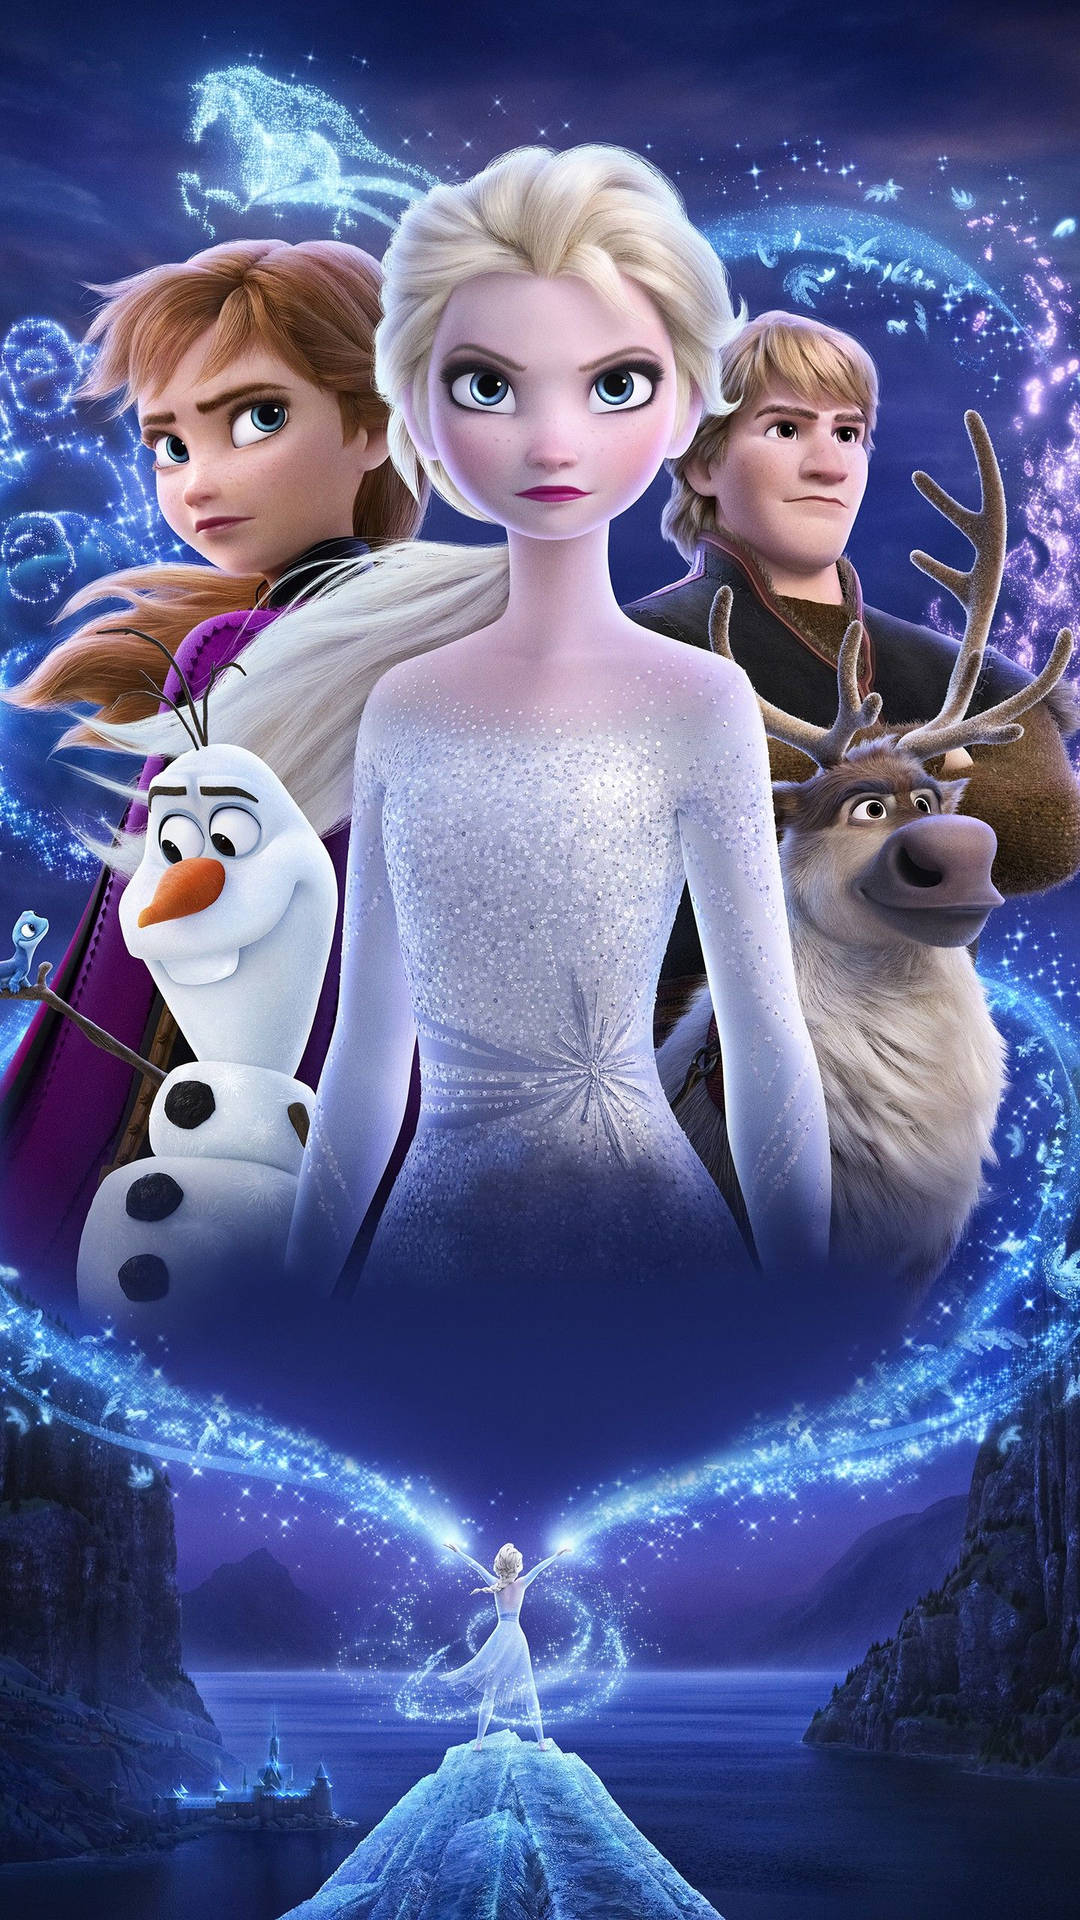 Elsa With Friends From Frozen 2 Wallpaper